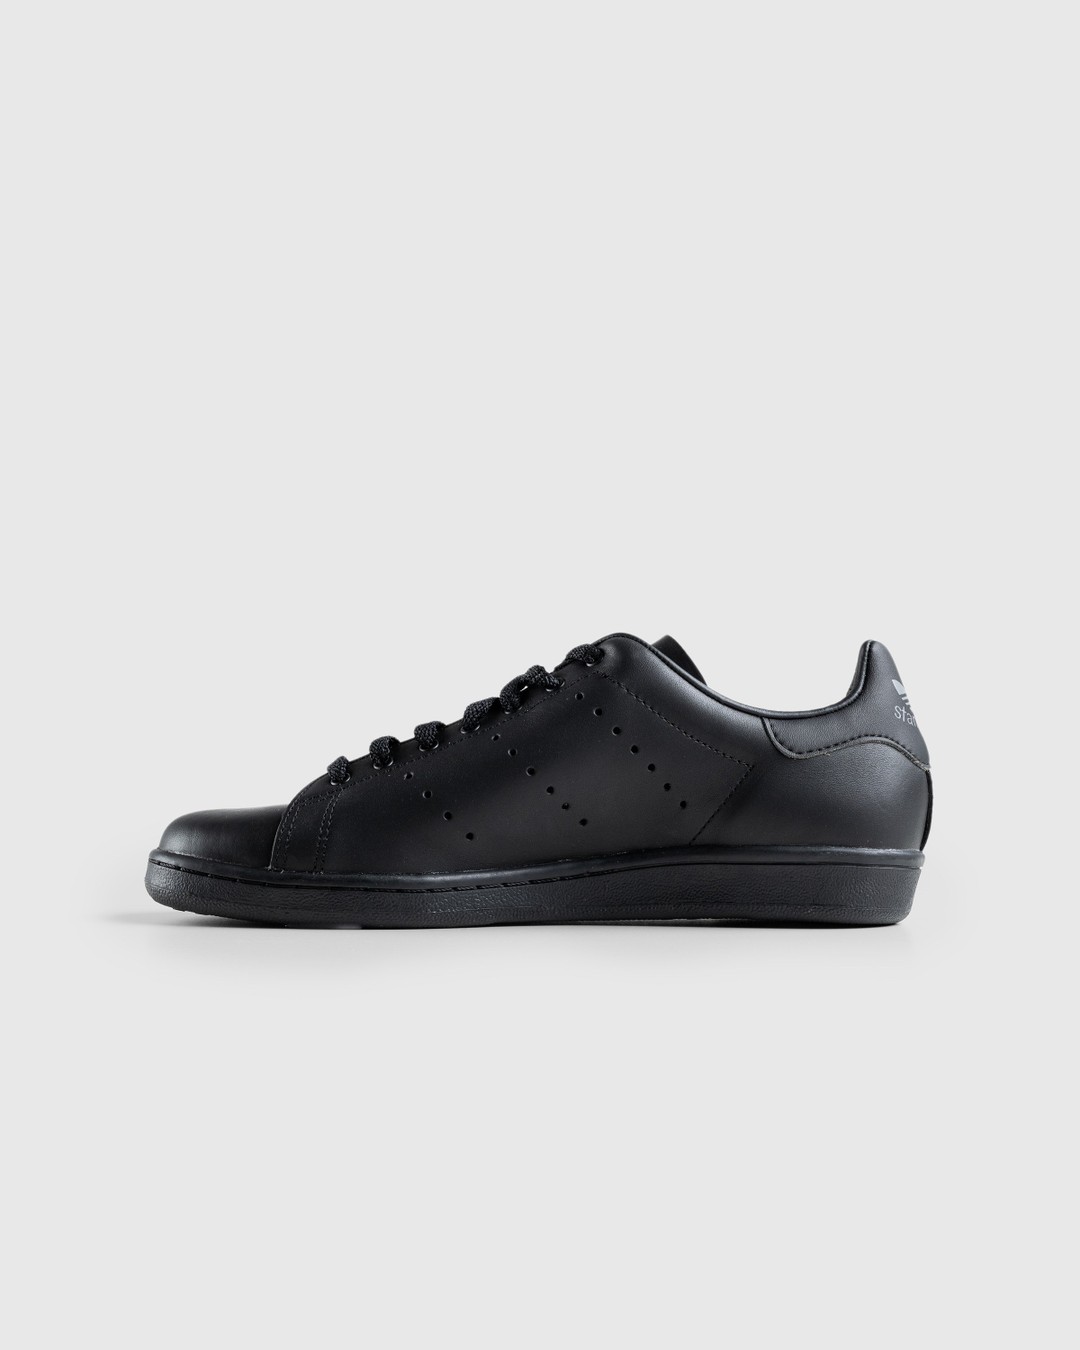 Adidas – Stan Smith 80s Black - Low Top Sneakers - Black - Image 2